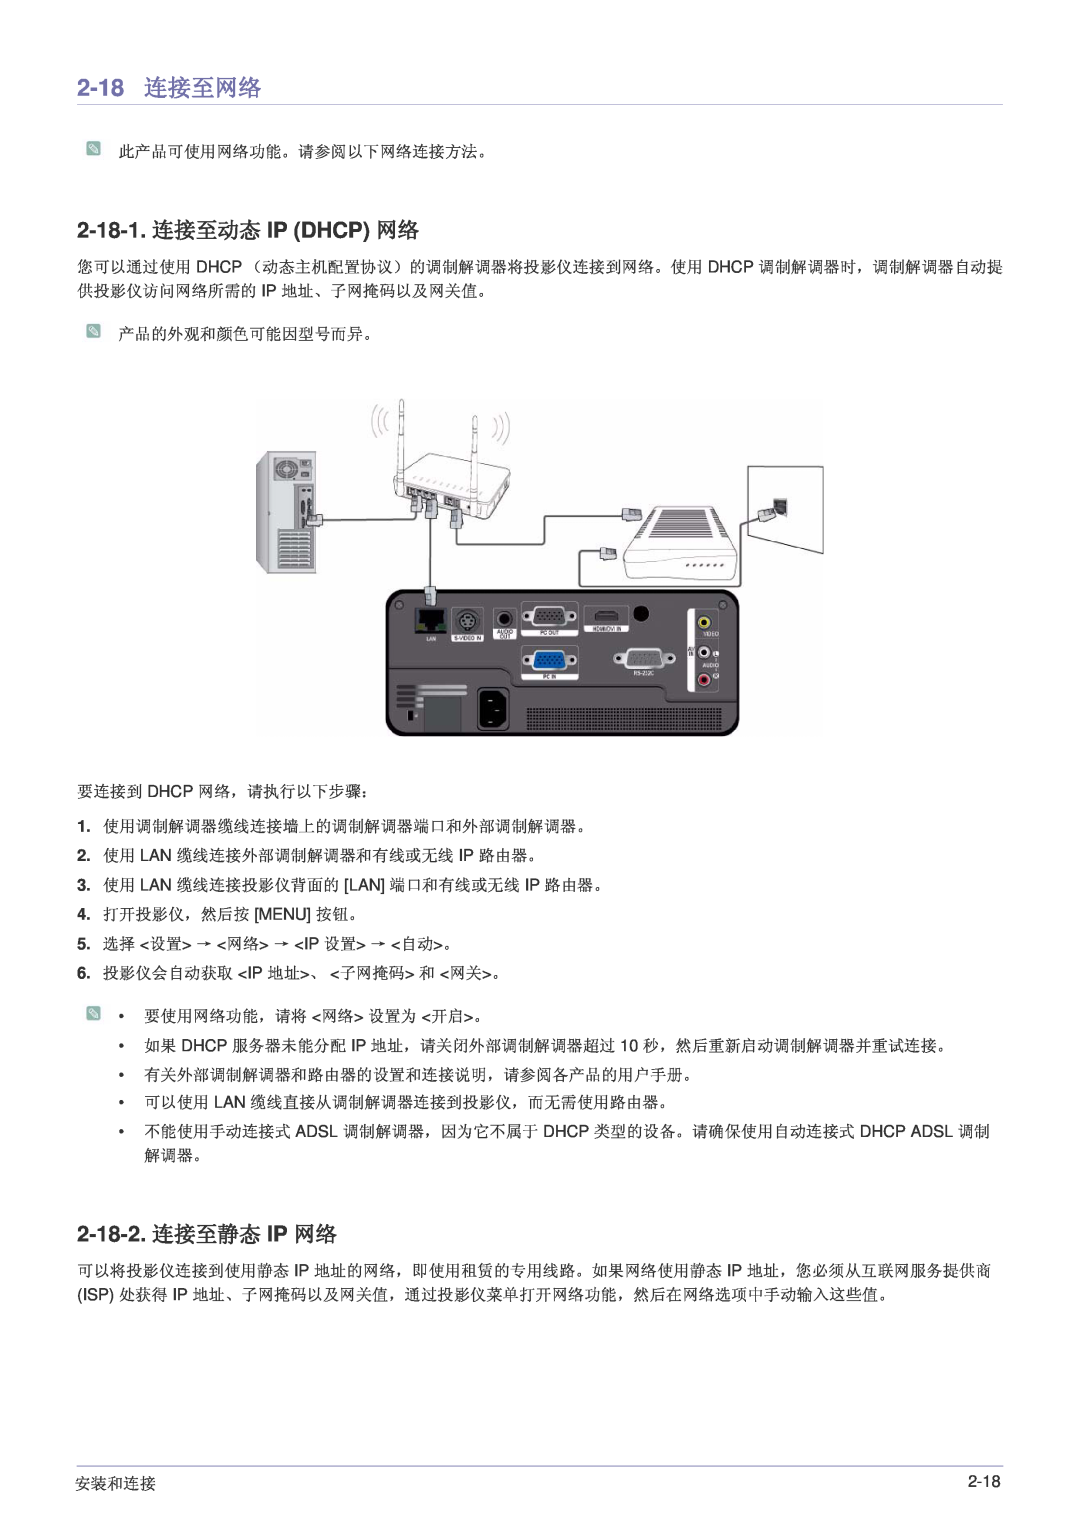 Samsung SP1055XWX/EN, SP1005XWX/EN manual 2-18 连接至网络, 2-18-1. 连接至动态 IP DHCP 网络, 2-18-2. 连接至静态 IP 网络 